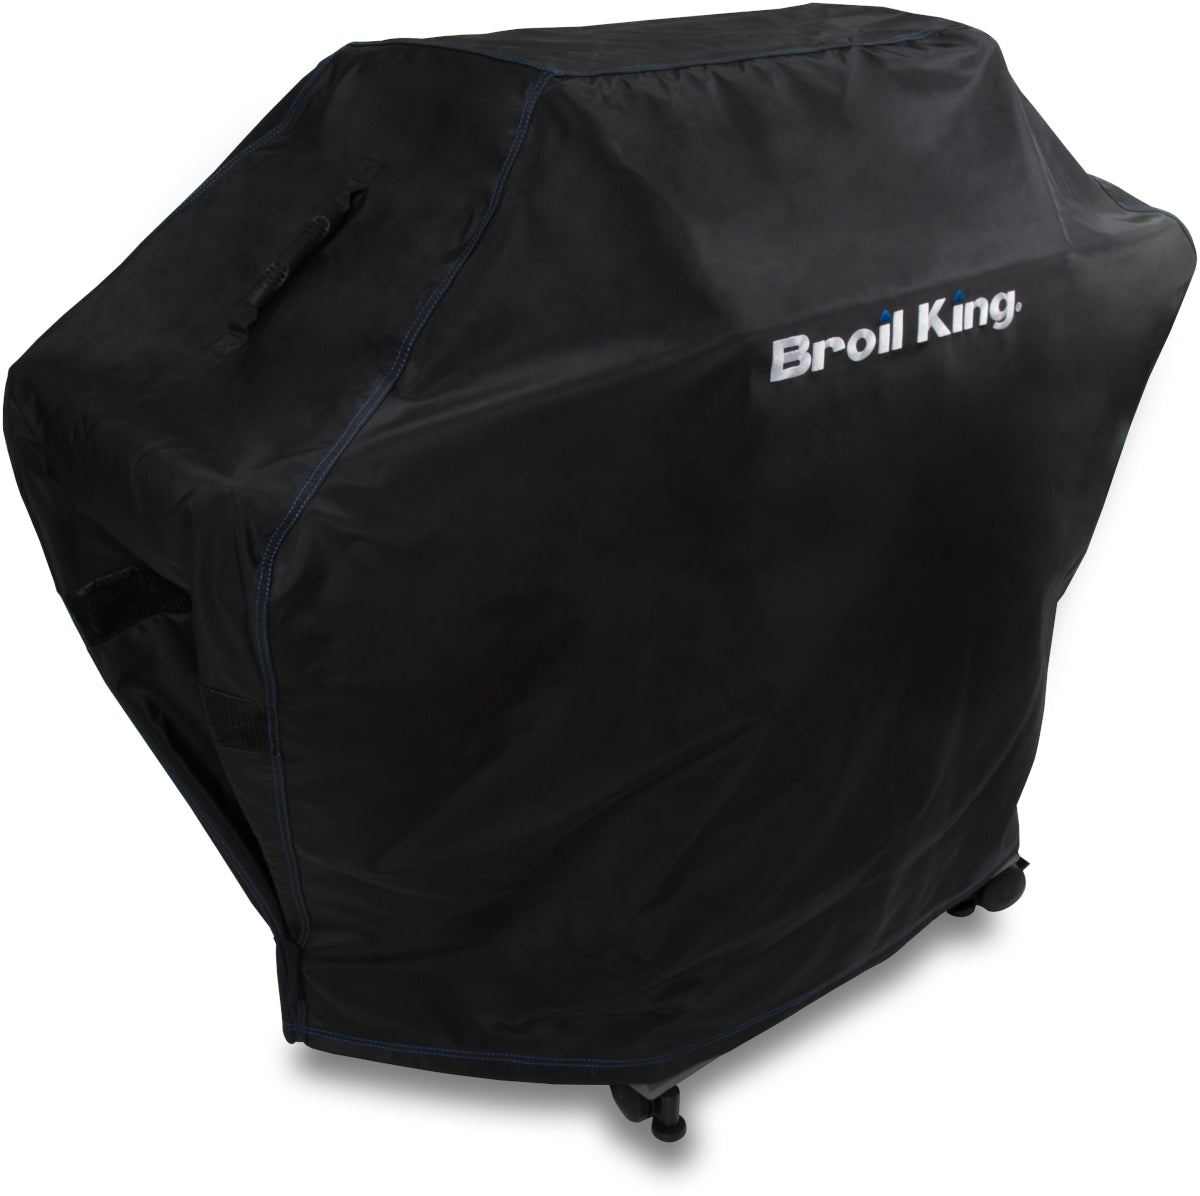 Broil King Premium Cover - Fits Regal S420 & S490 Pro.